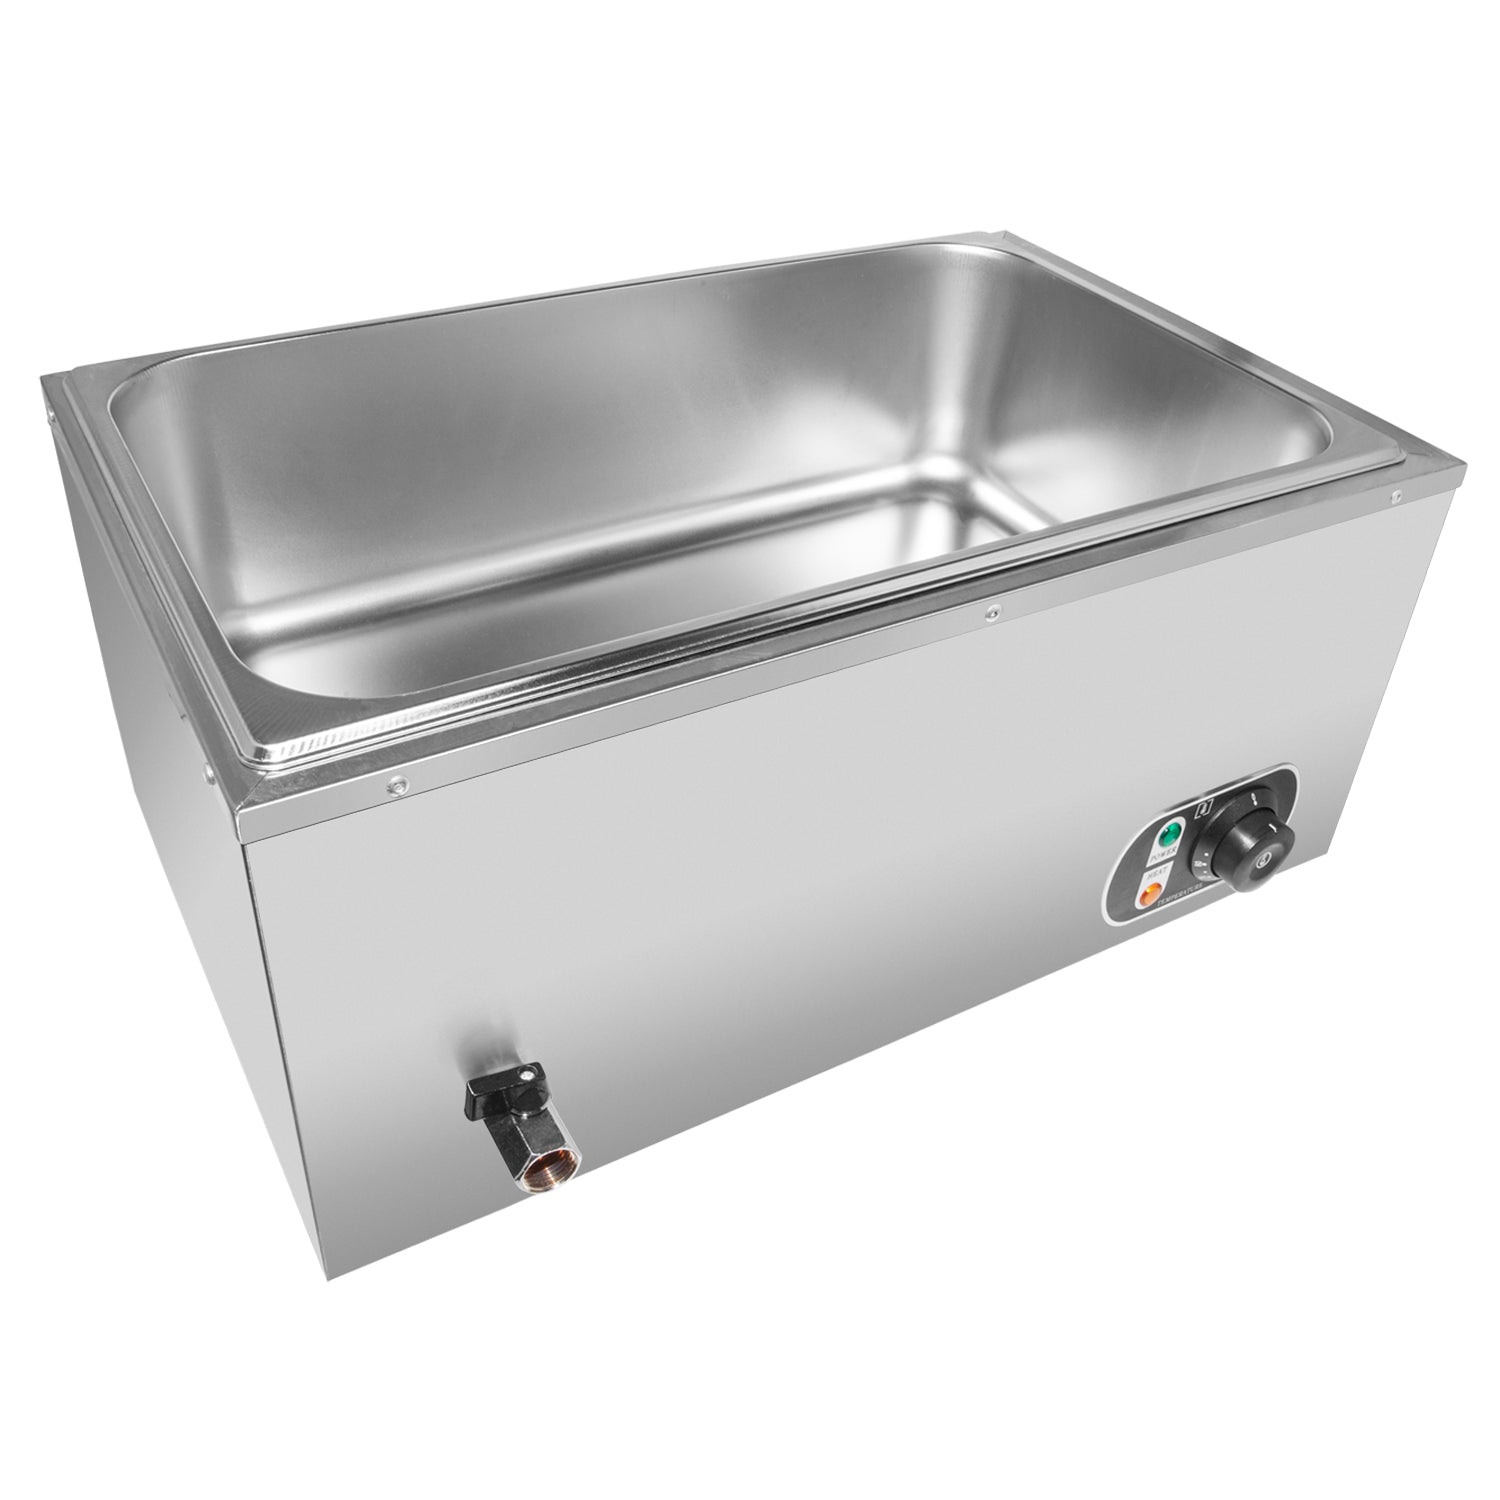 ALDKitchen Bain Marie Steam Warmer | Electric Buffet Food Warmer | Stainless Steel | 1 tank | 110V